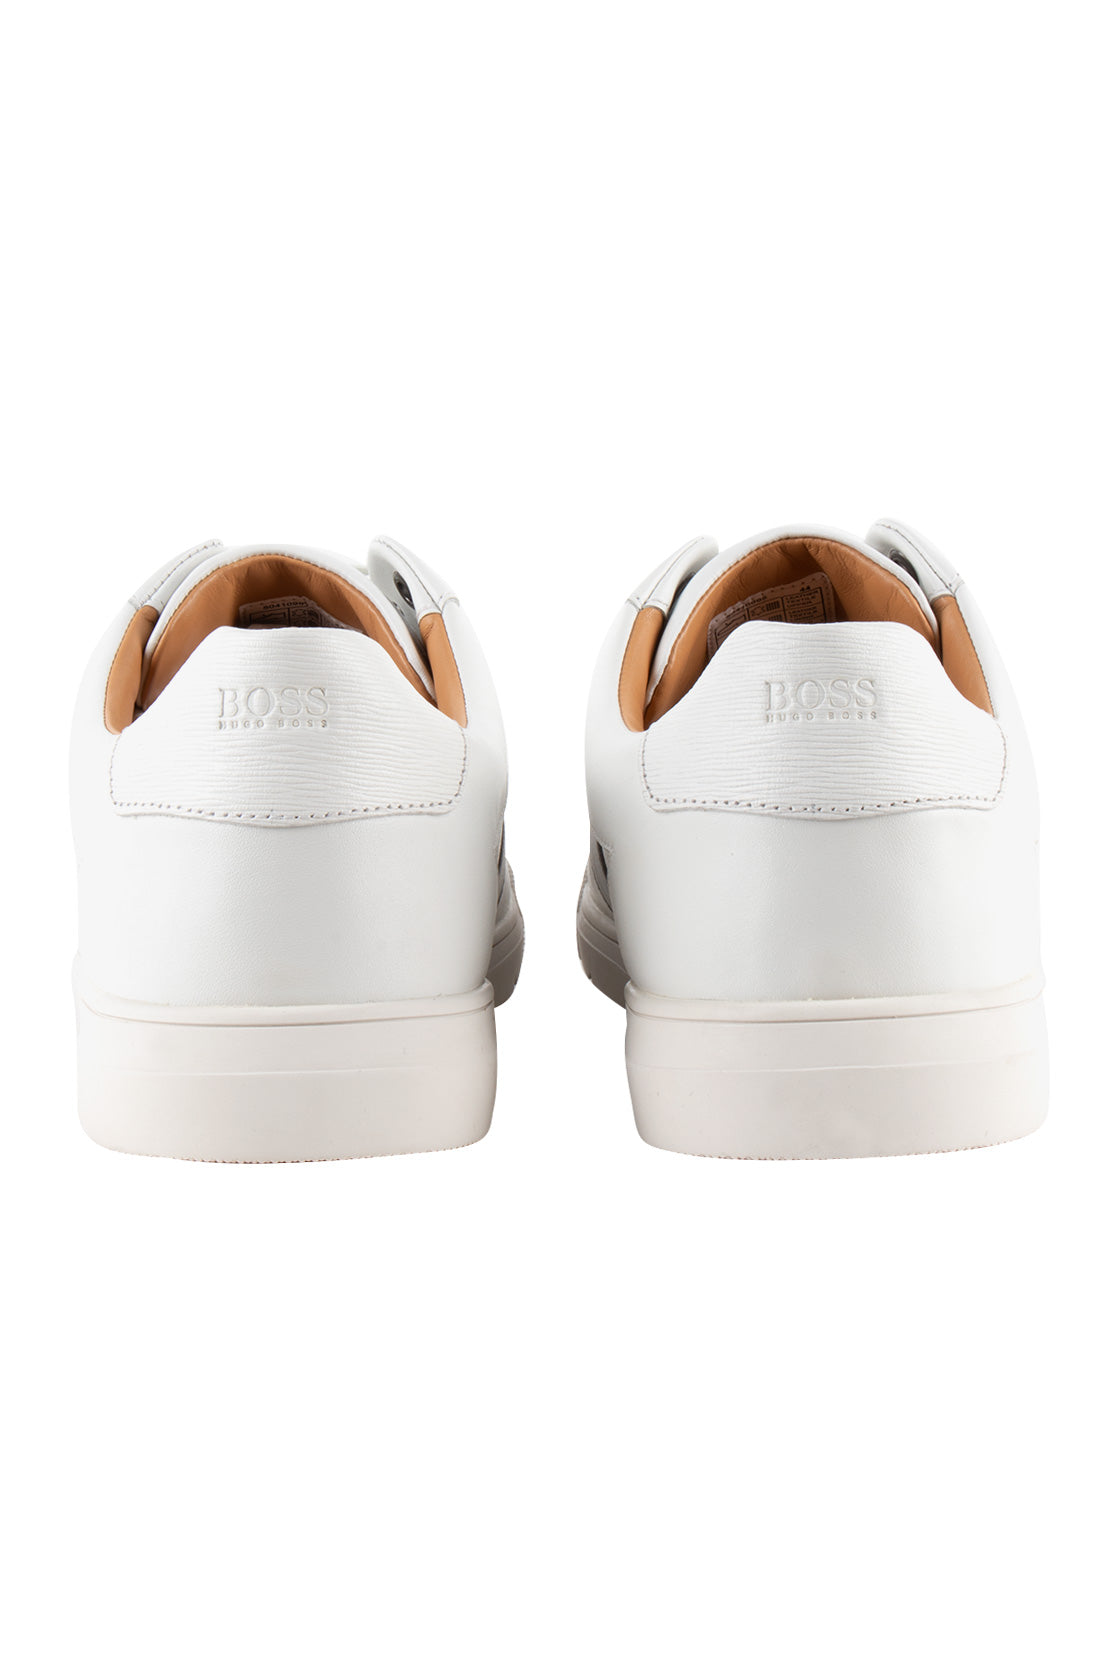 Hugo Boss Cosmo Tenn Shoe White